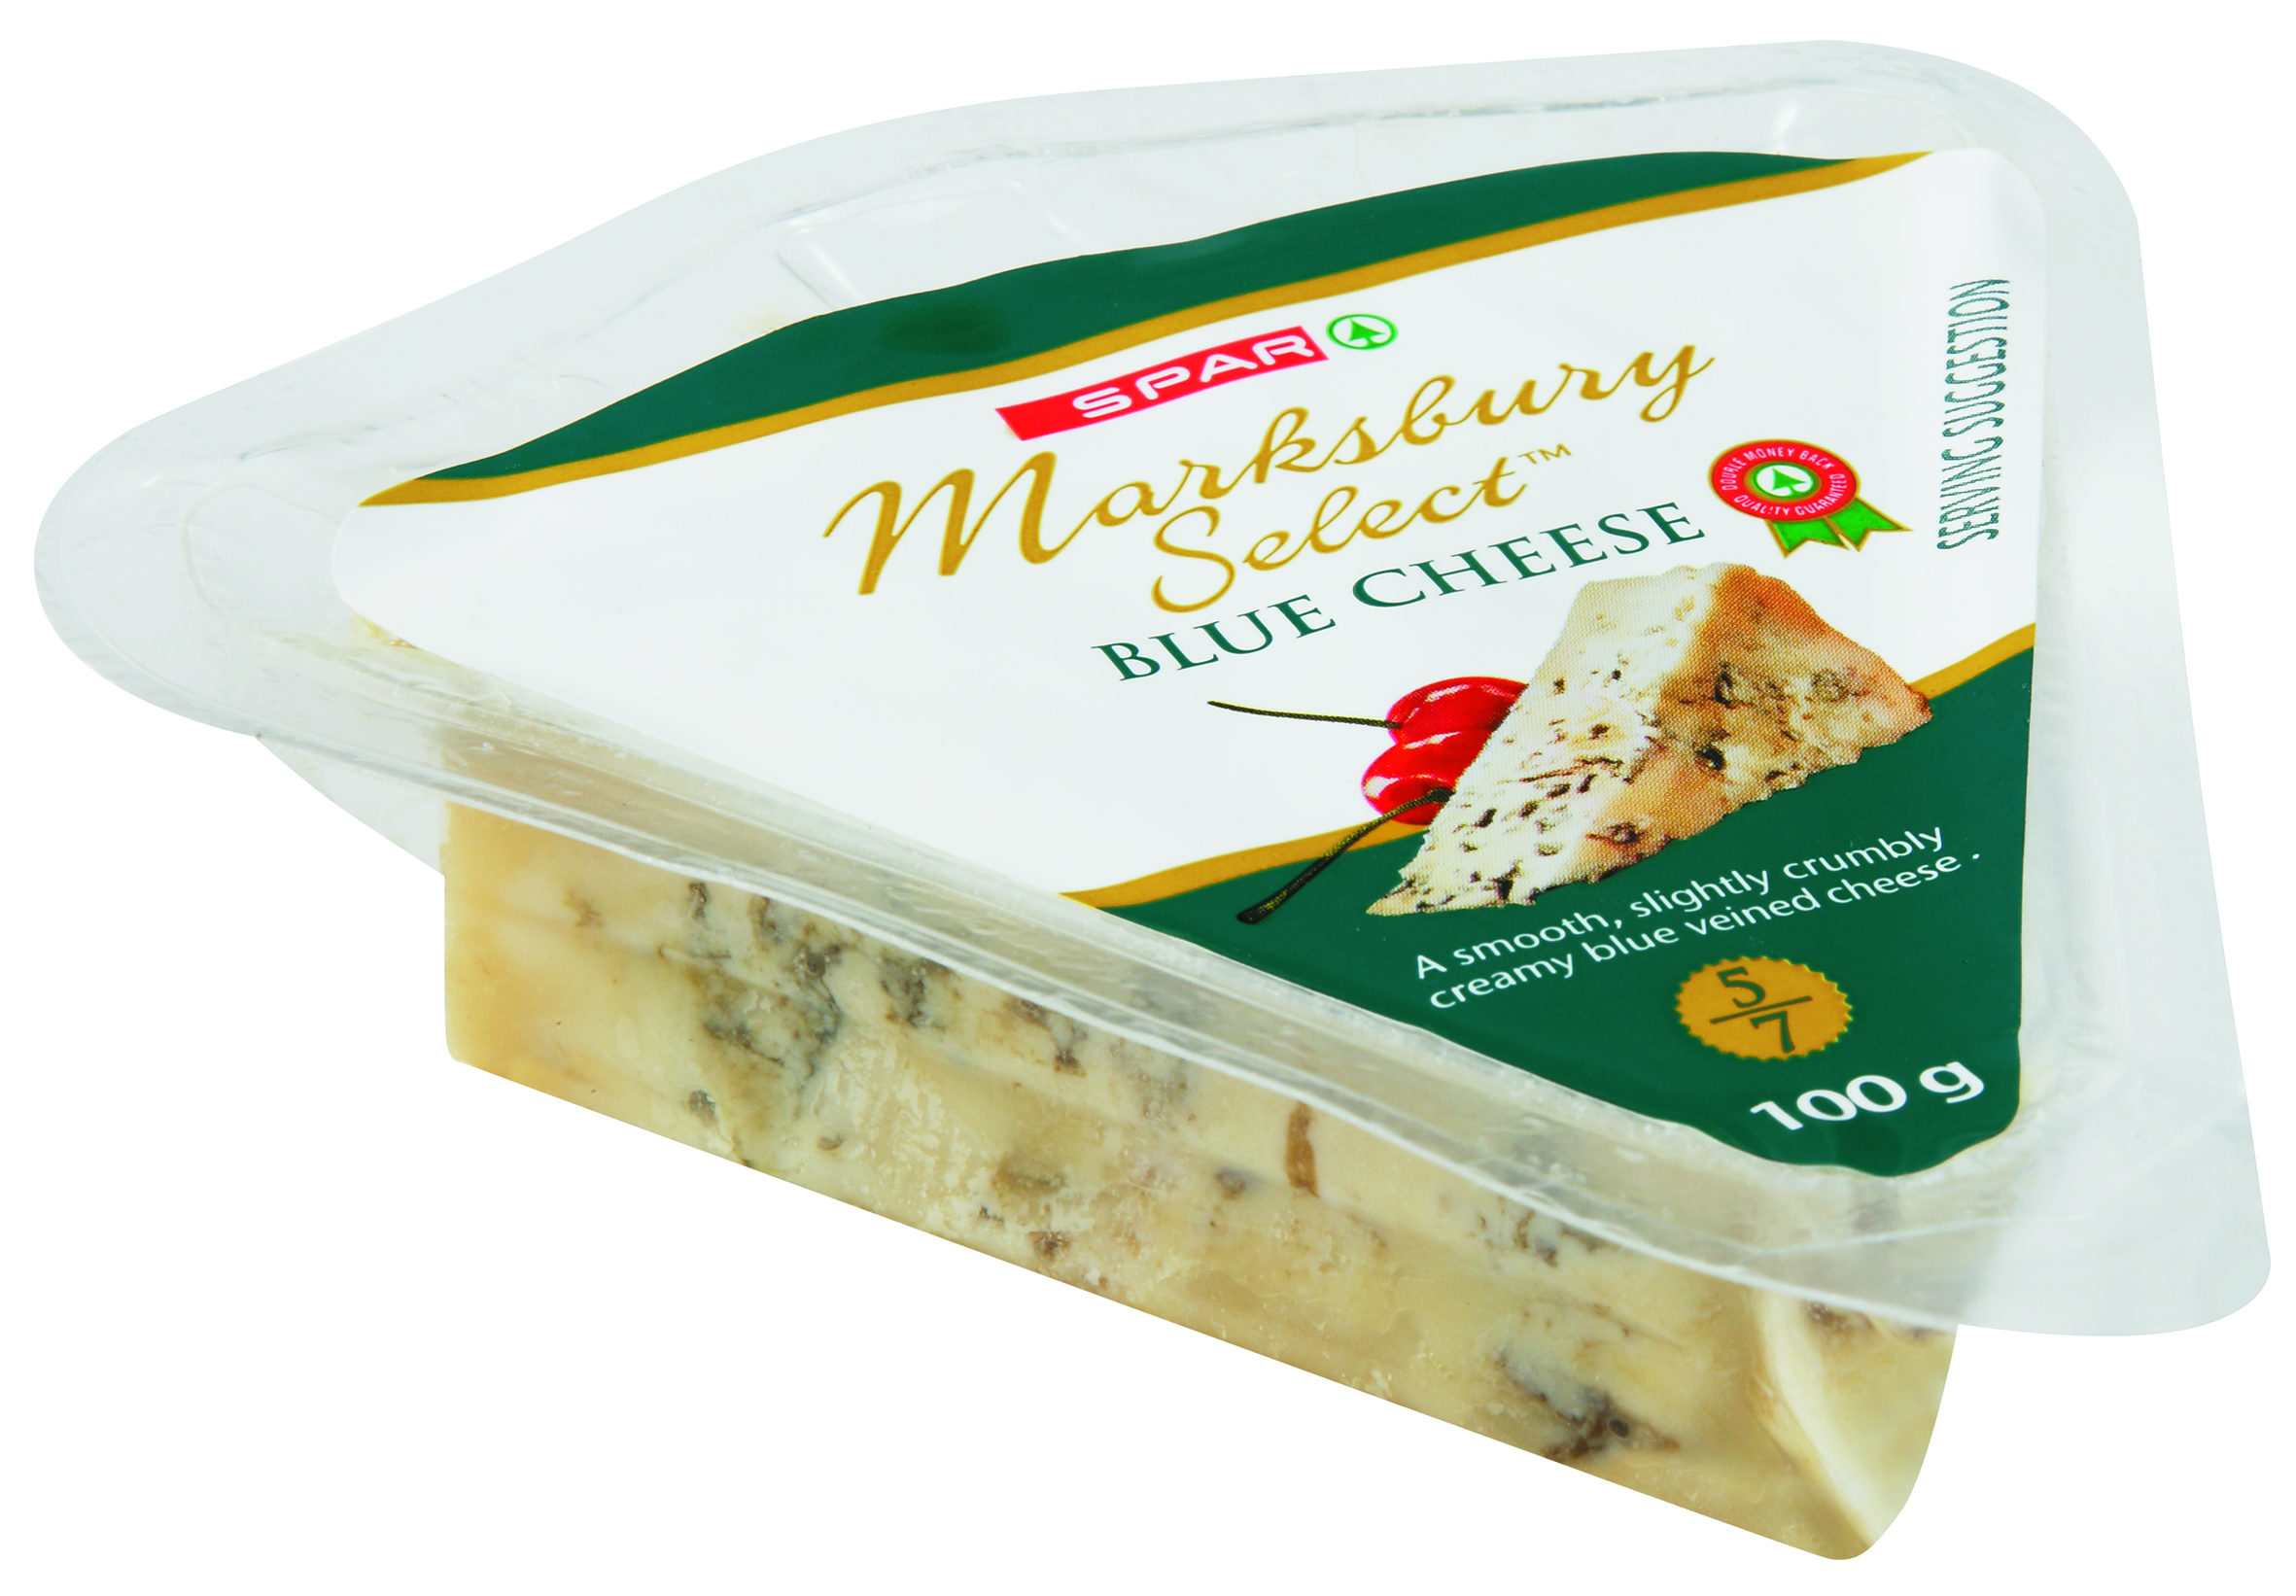 marksbury select cheese blue